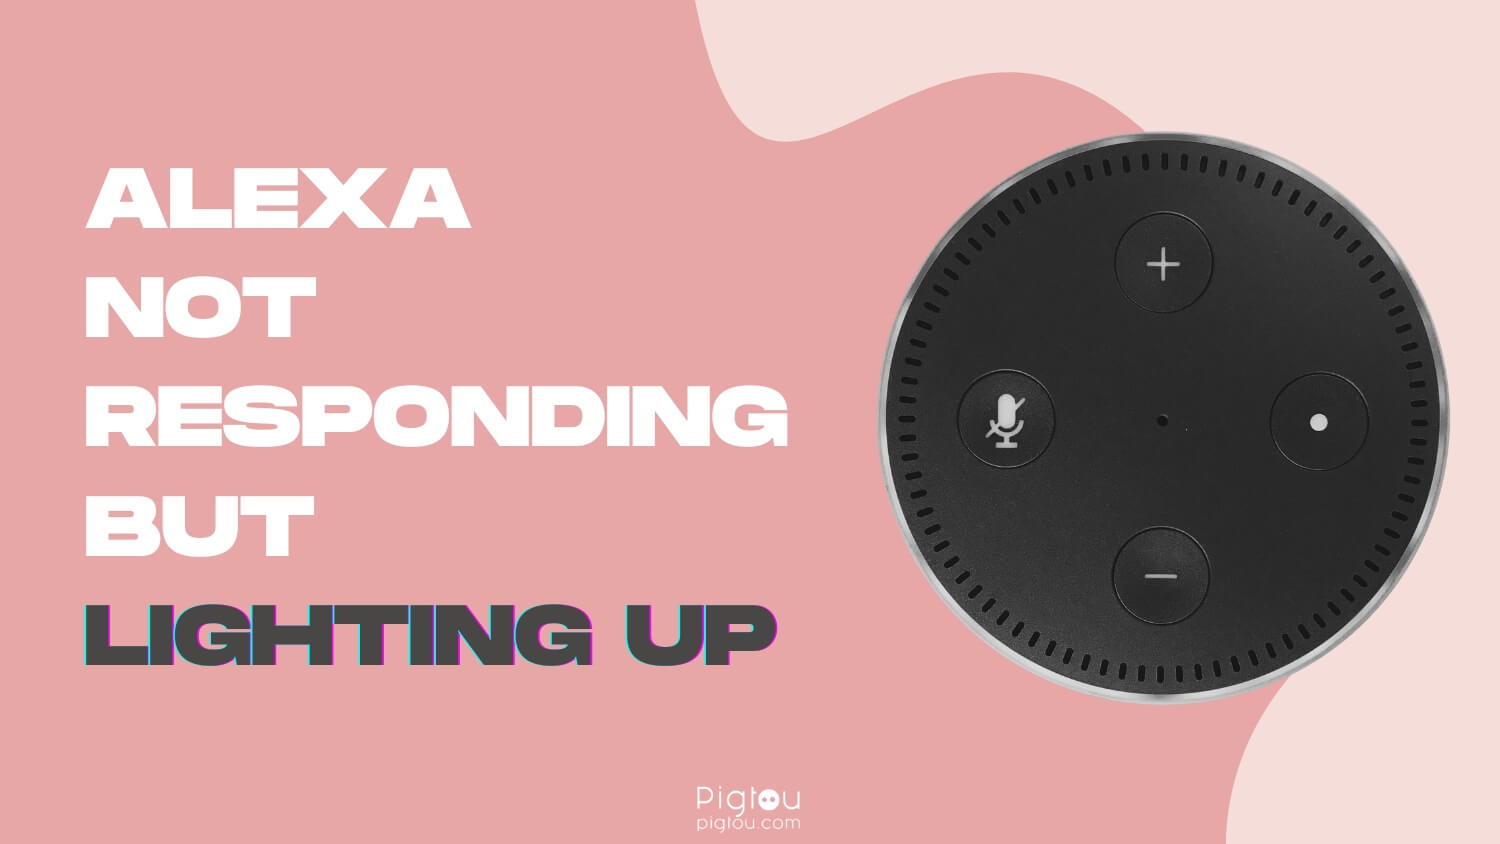 How to Fix Alexa Not Responding but Lighting Up